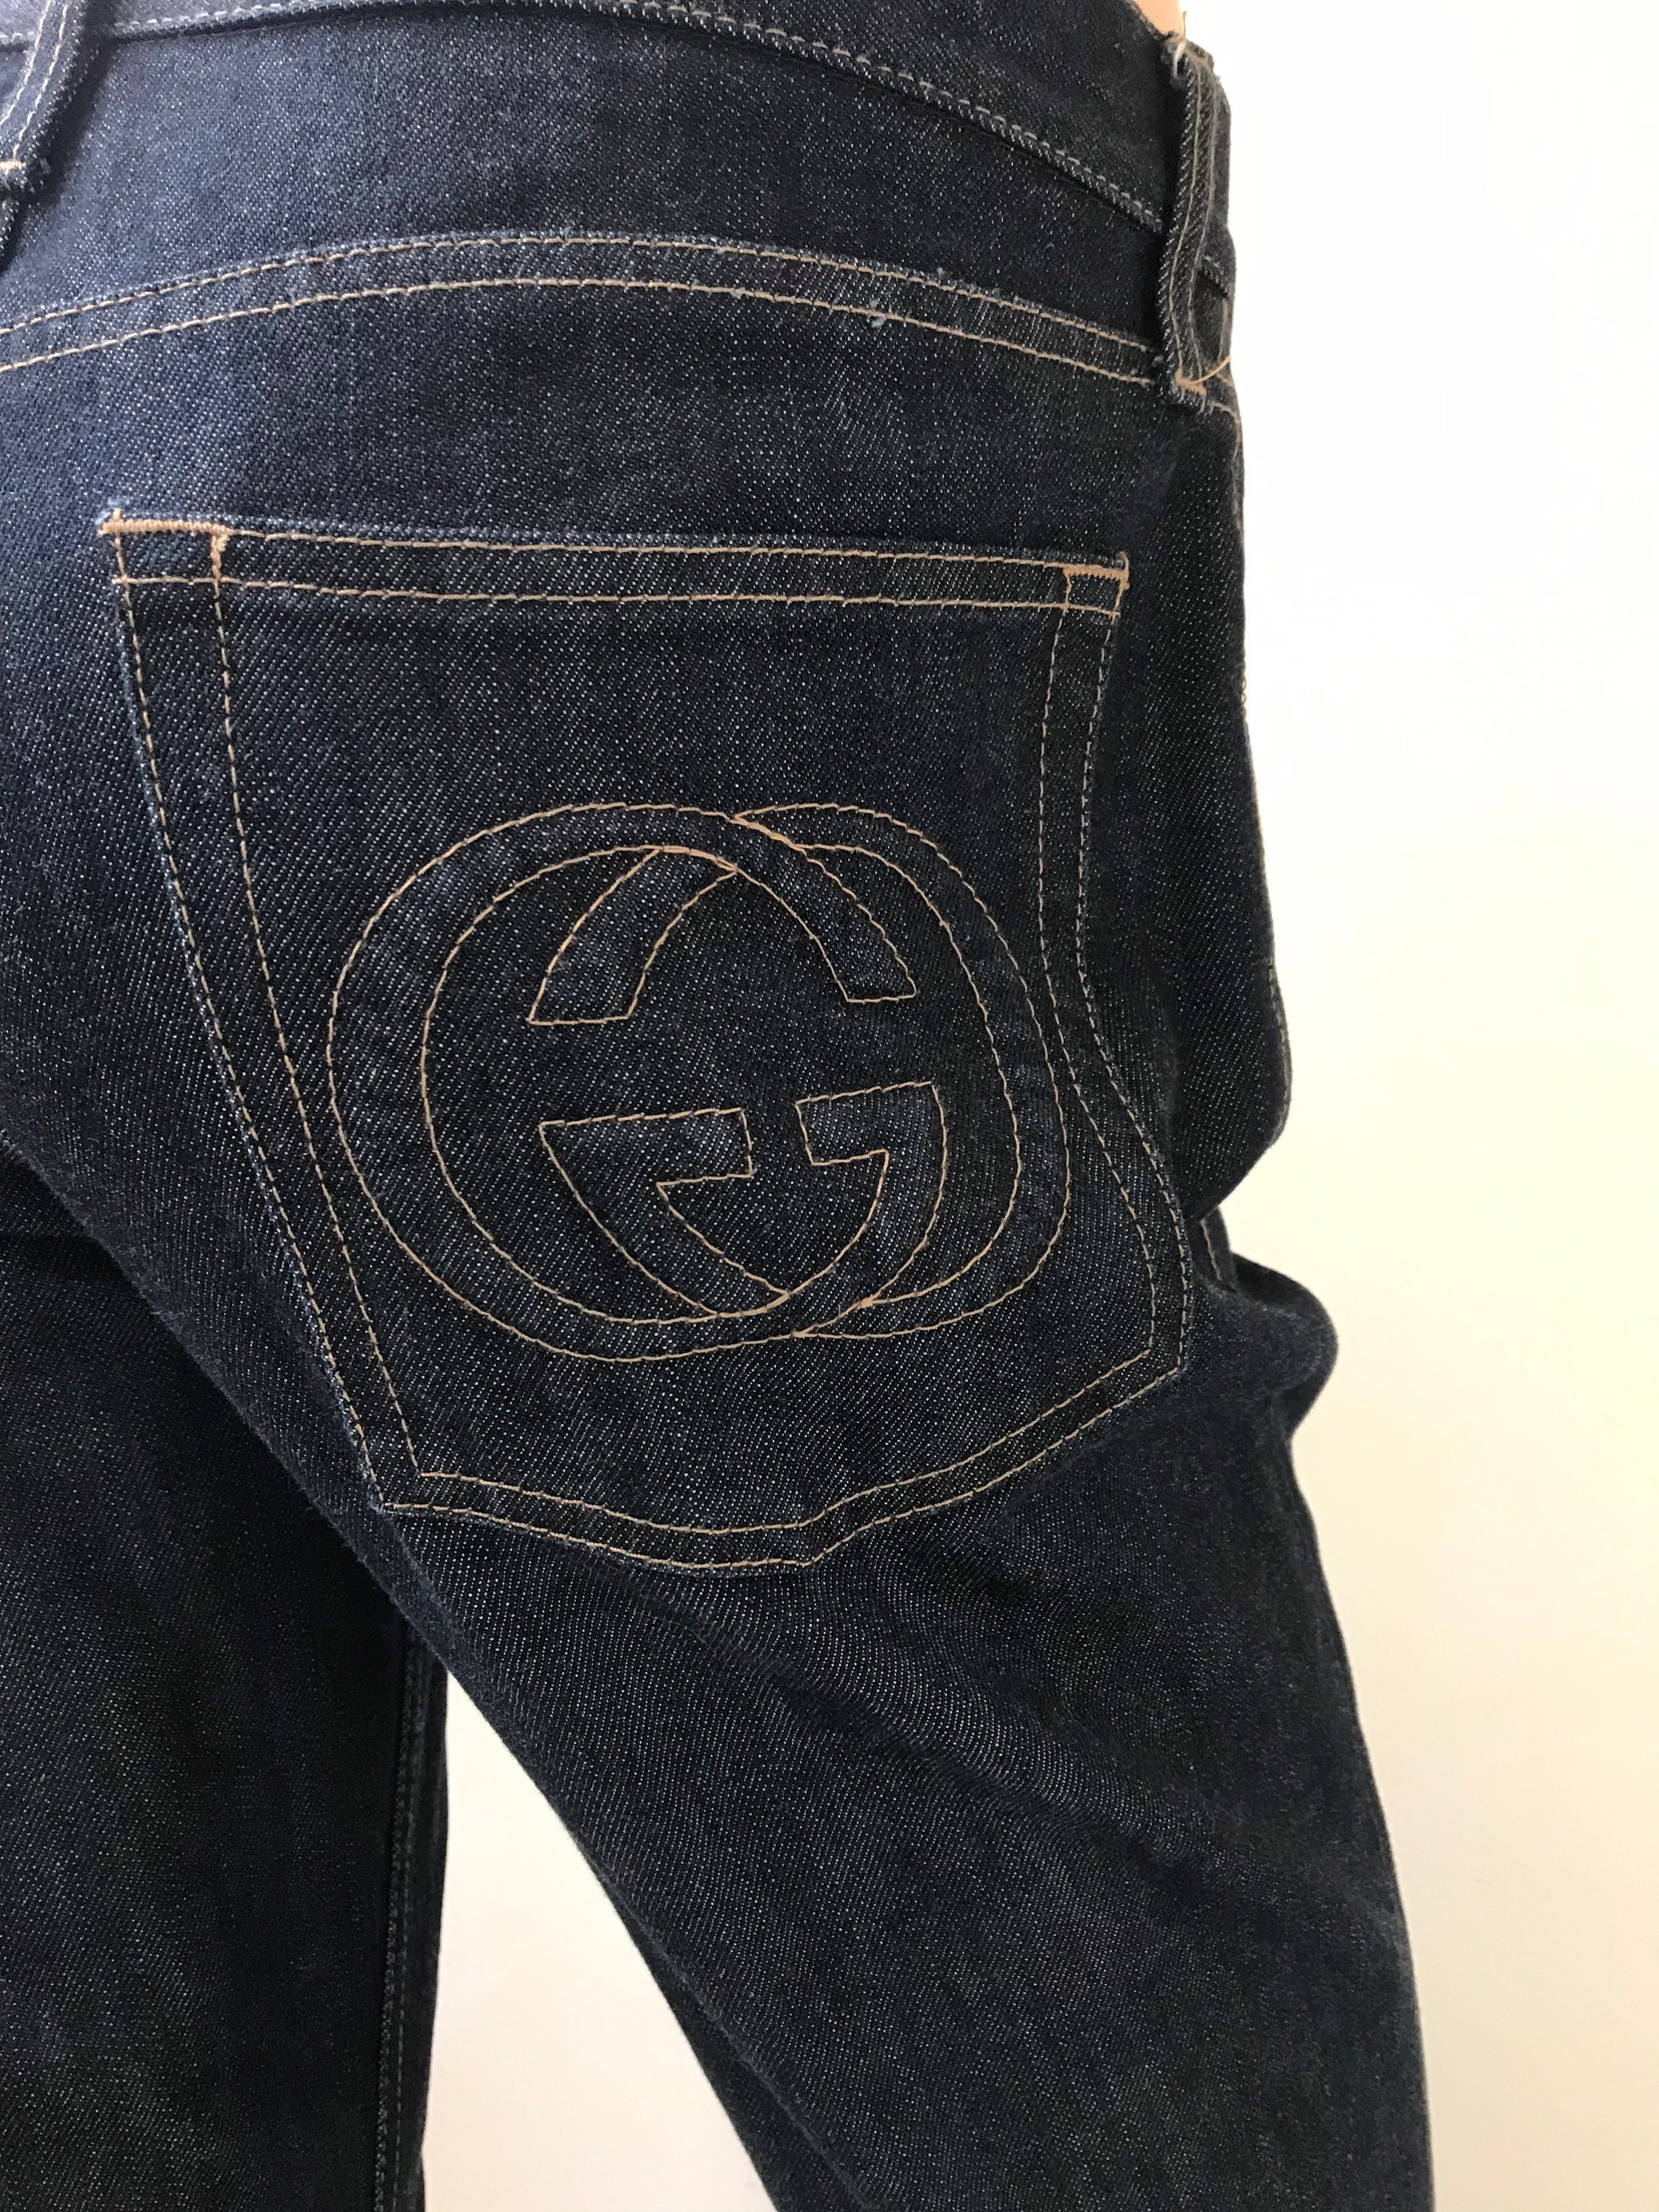 Gucci, Jeans, Gucci Mens Jeans Authentic